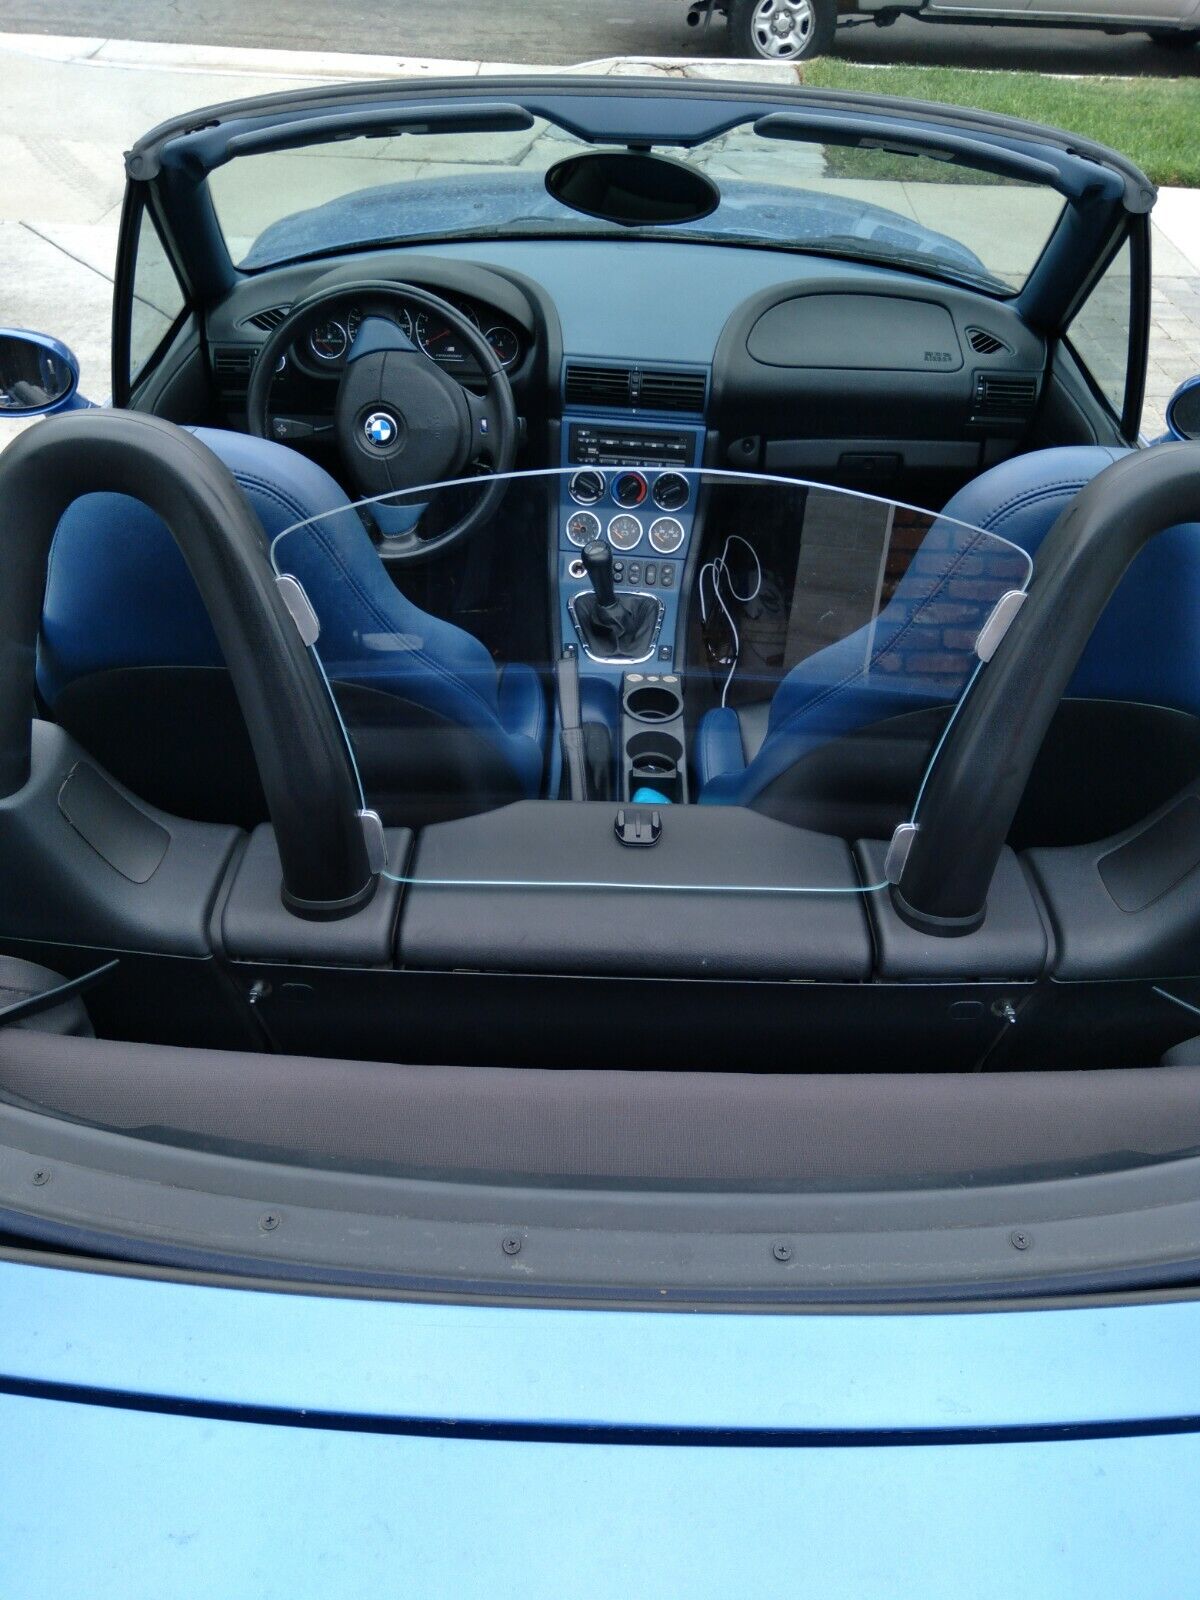  5⭐2001/2002 BMW Z3  Roaster Wind Deflector (Tint Add Only)